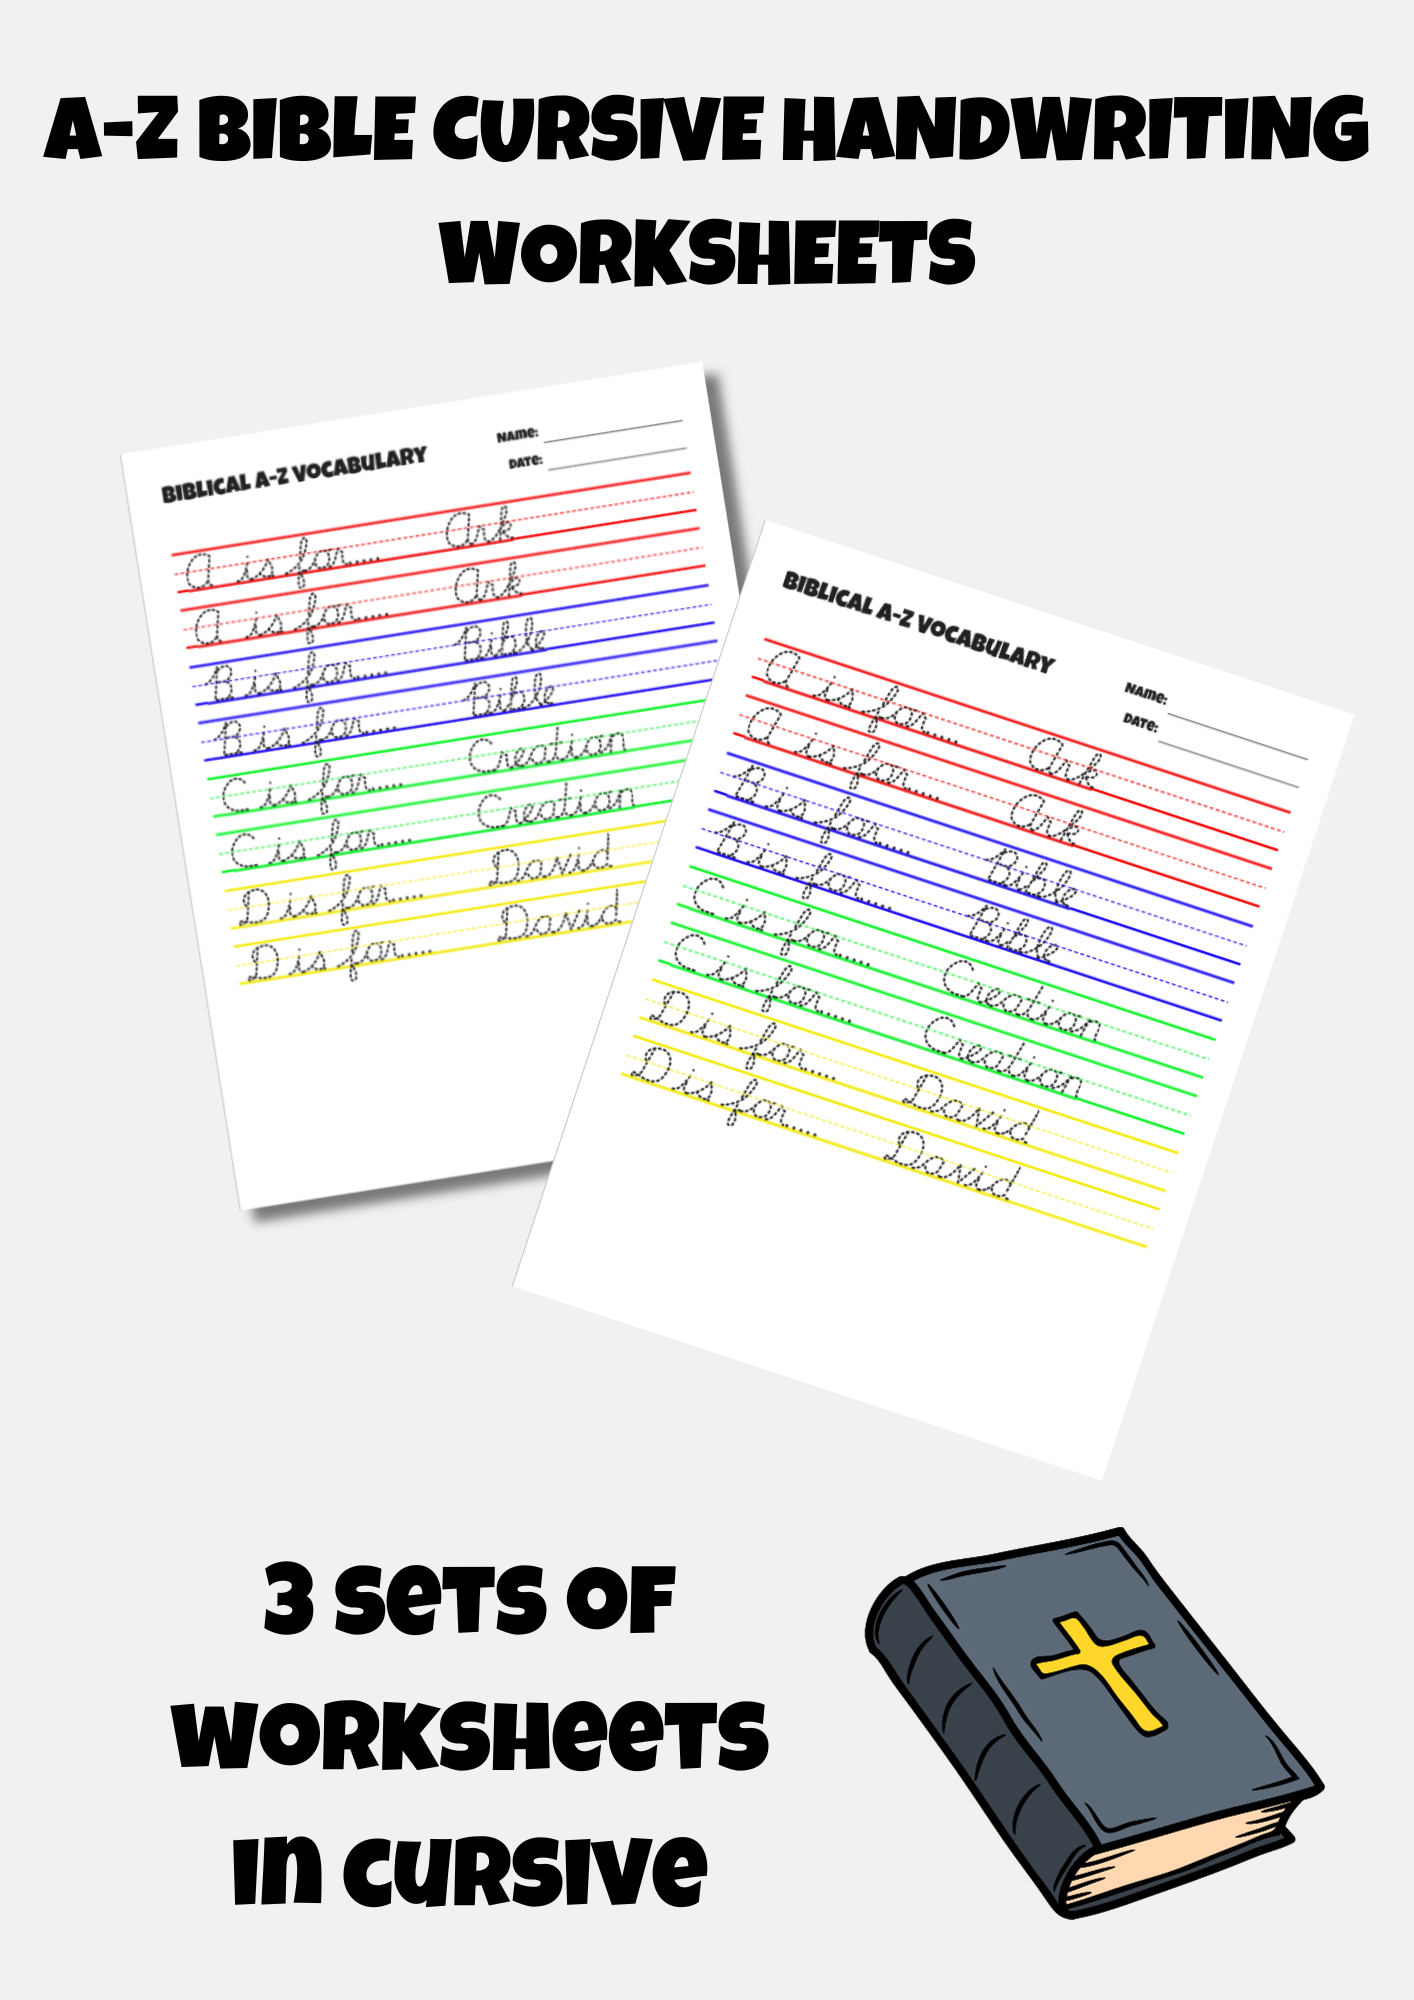 A-Z Bible Cursive Handwriting Worksheets